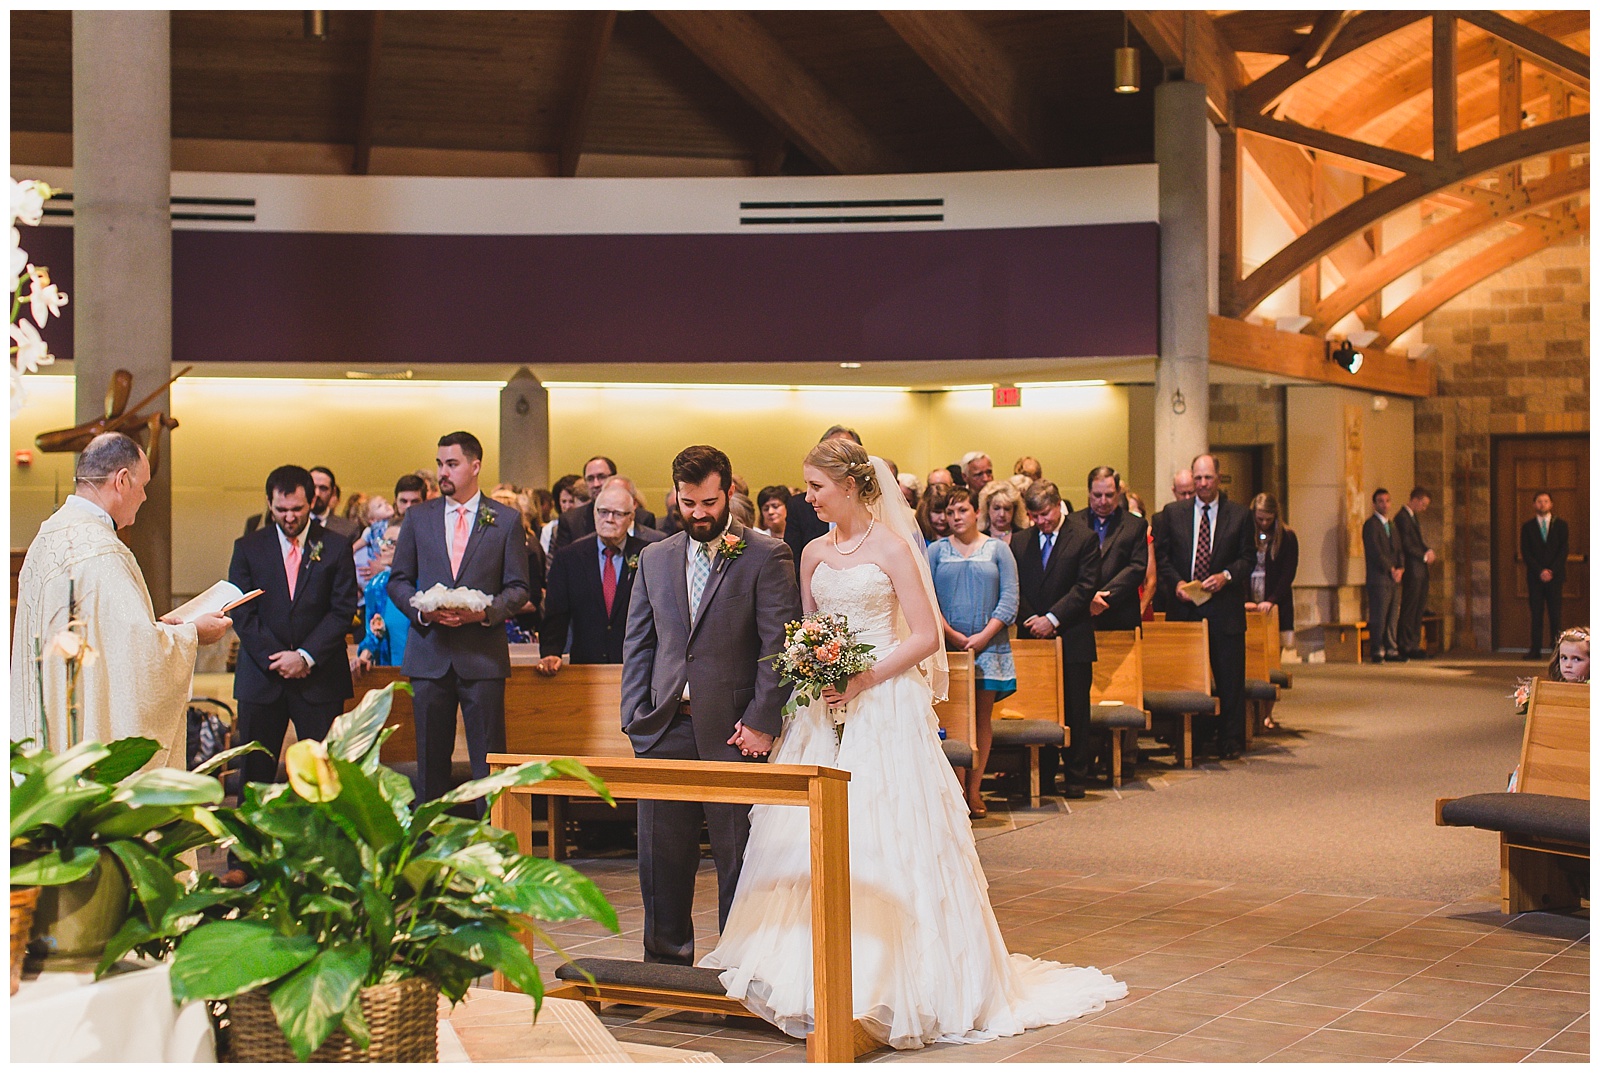 Wedding photography at Good Shepherd Catholic Church in Shawnee, Kansas.